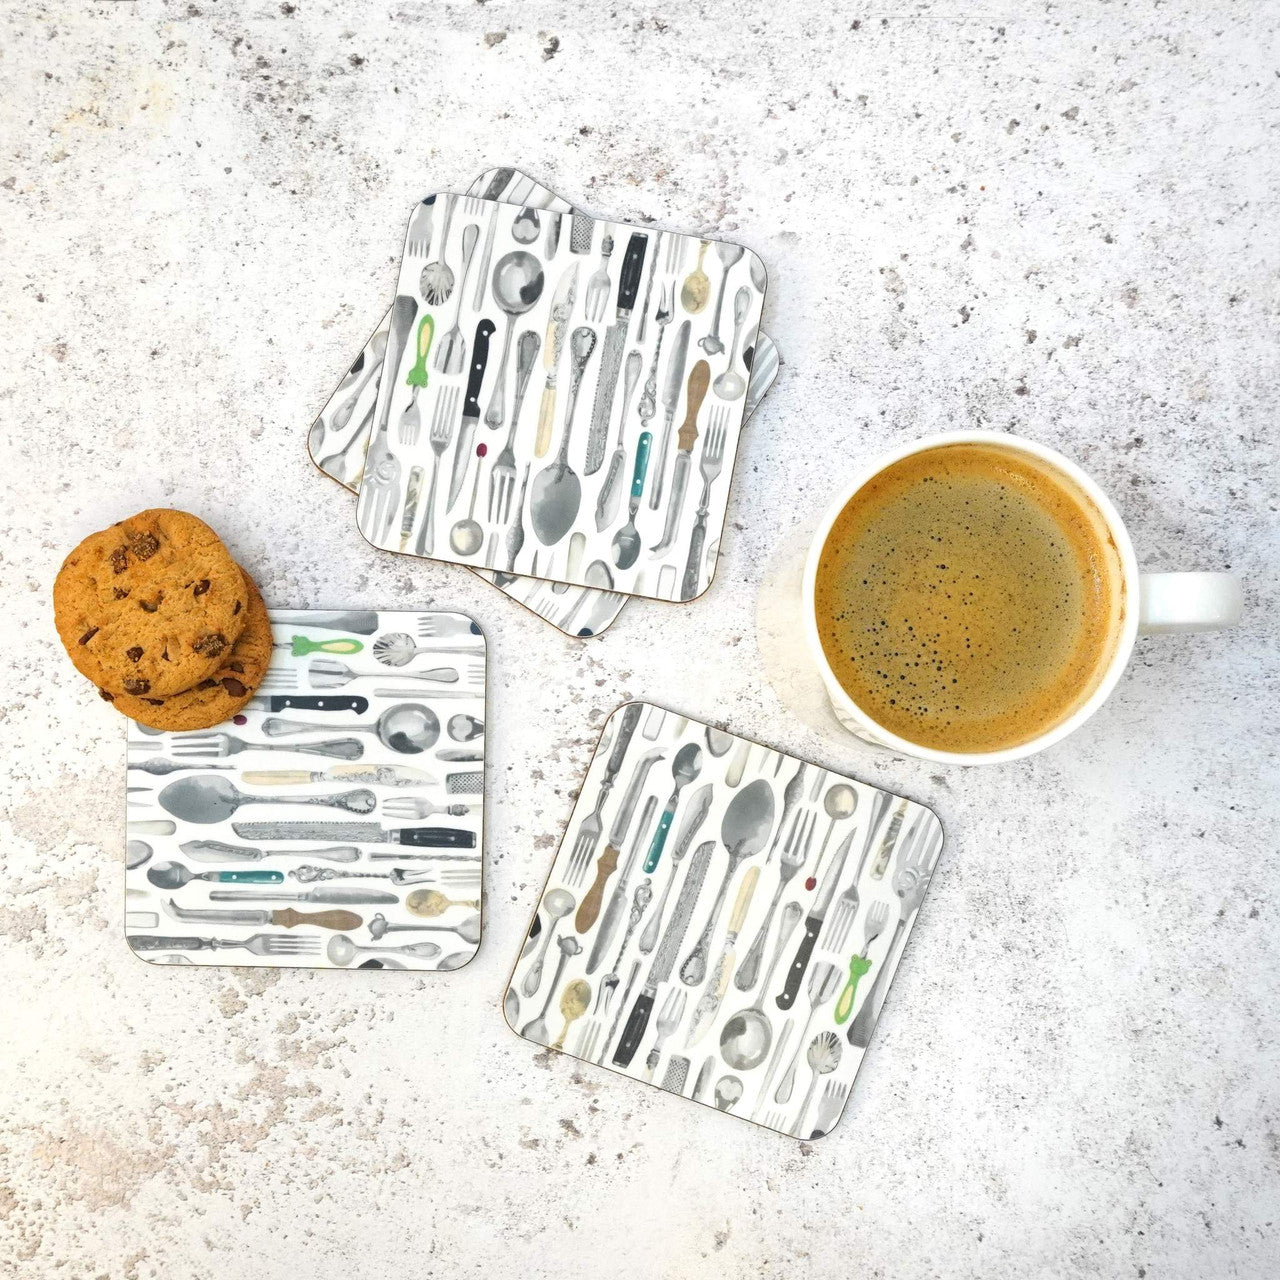 Cutlery Coasters by Corinne Alexander.